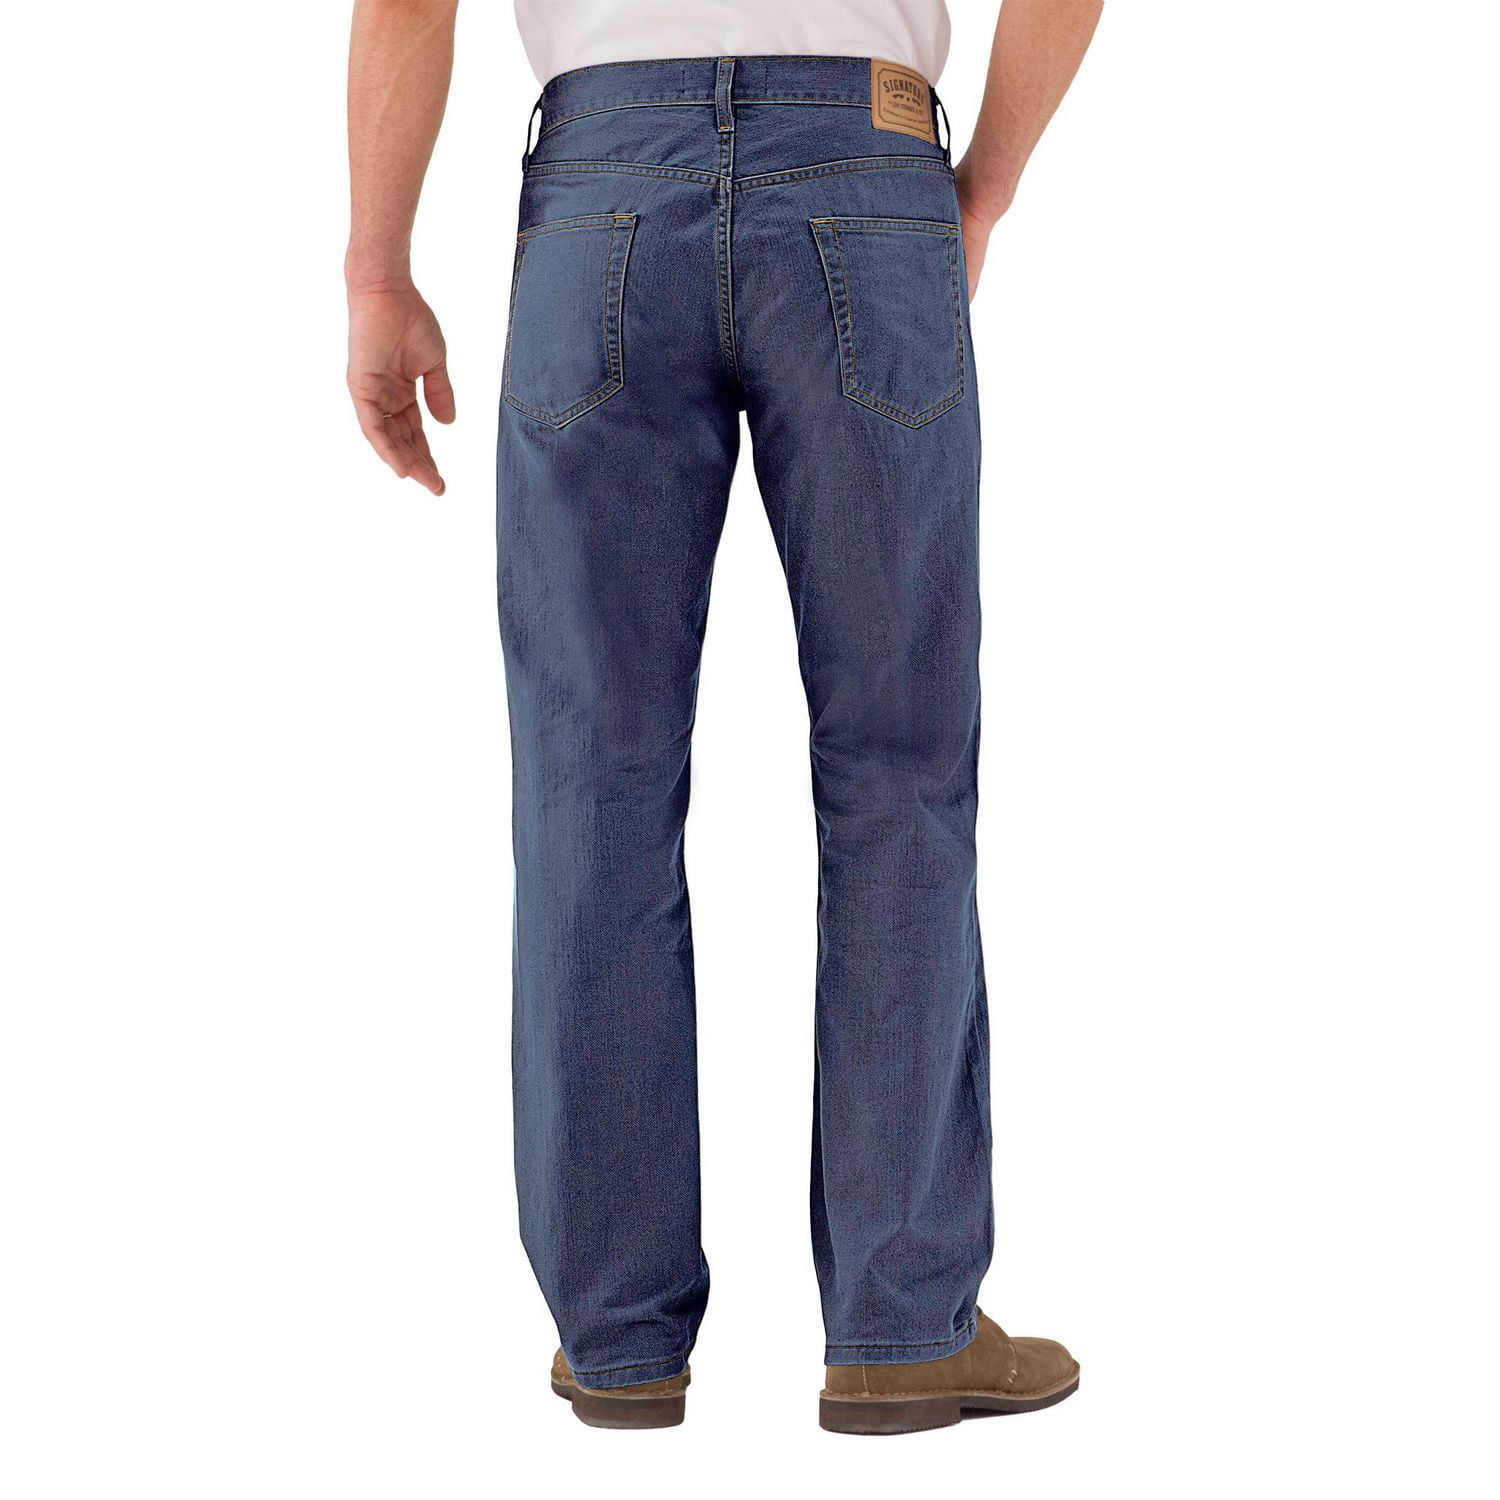 Levi's Jeans Size 34x32 Mens Mid Rise Straight Leg Dark Wash Blue Denim